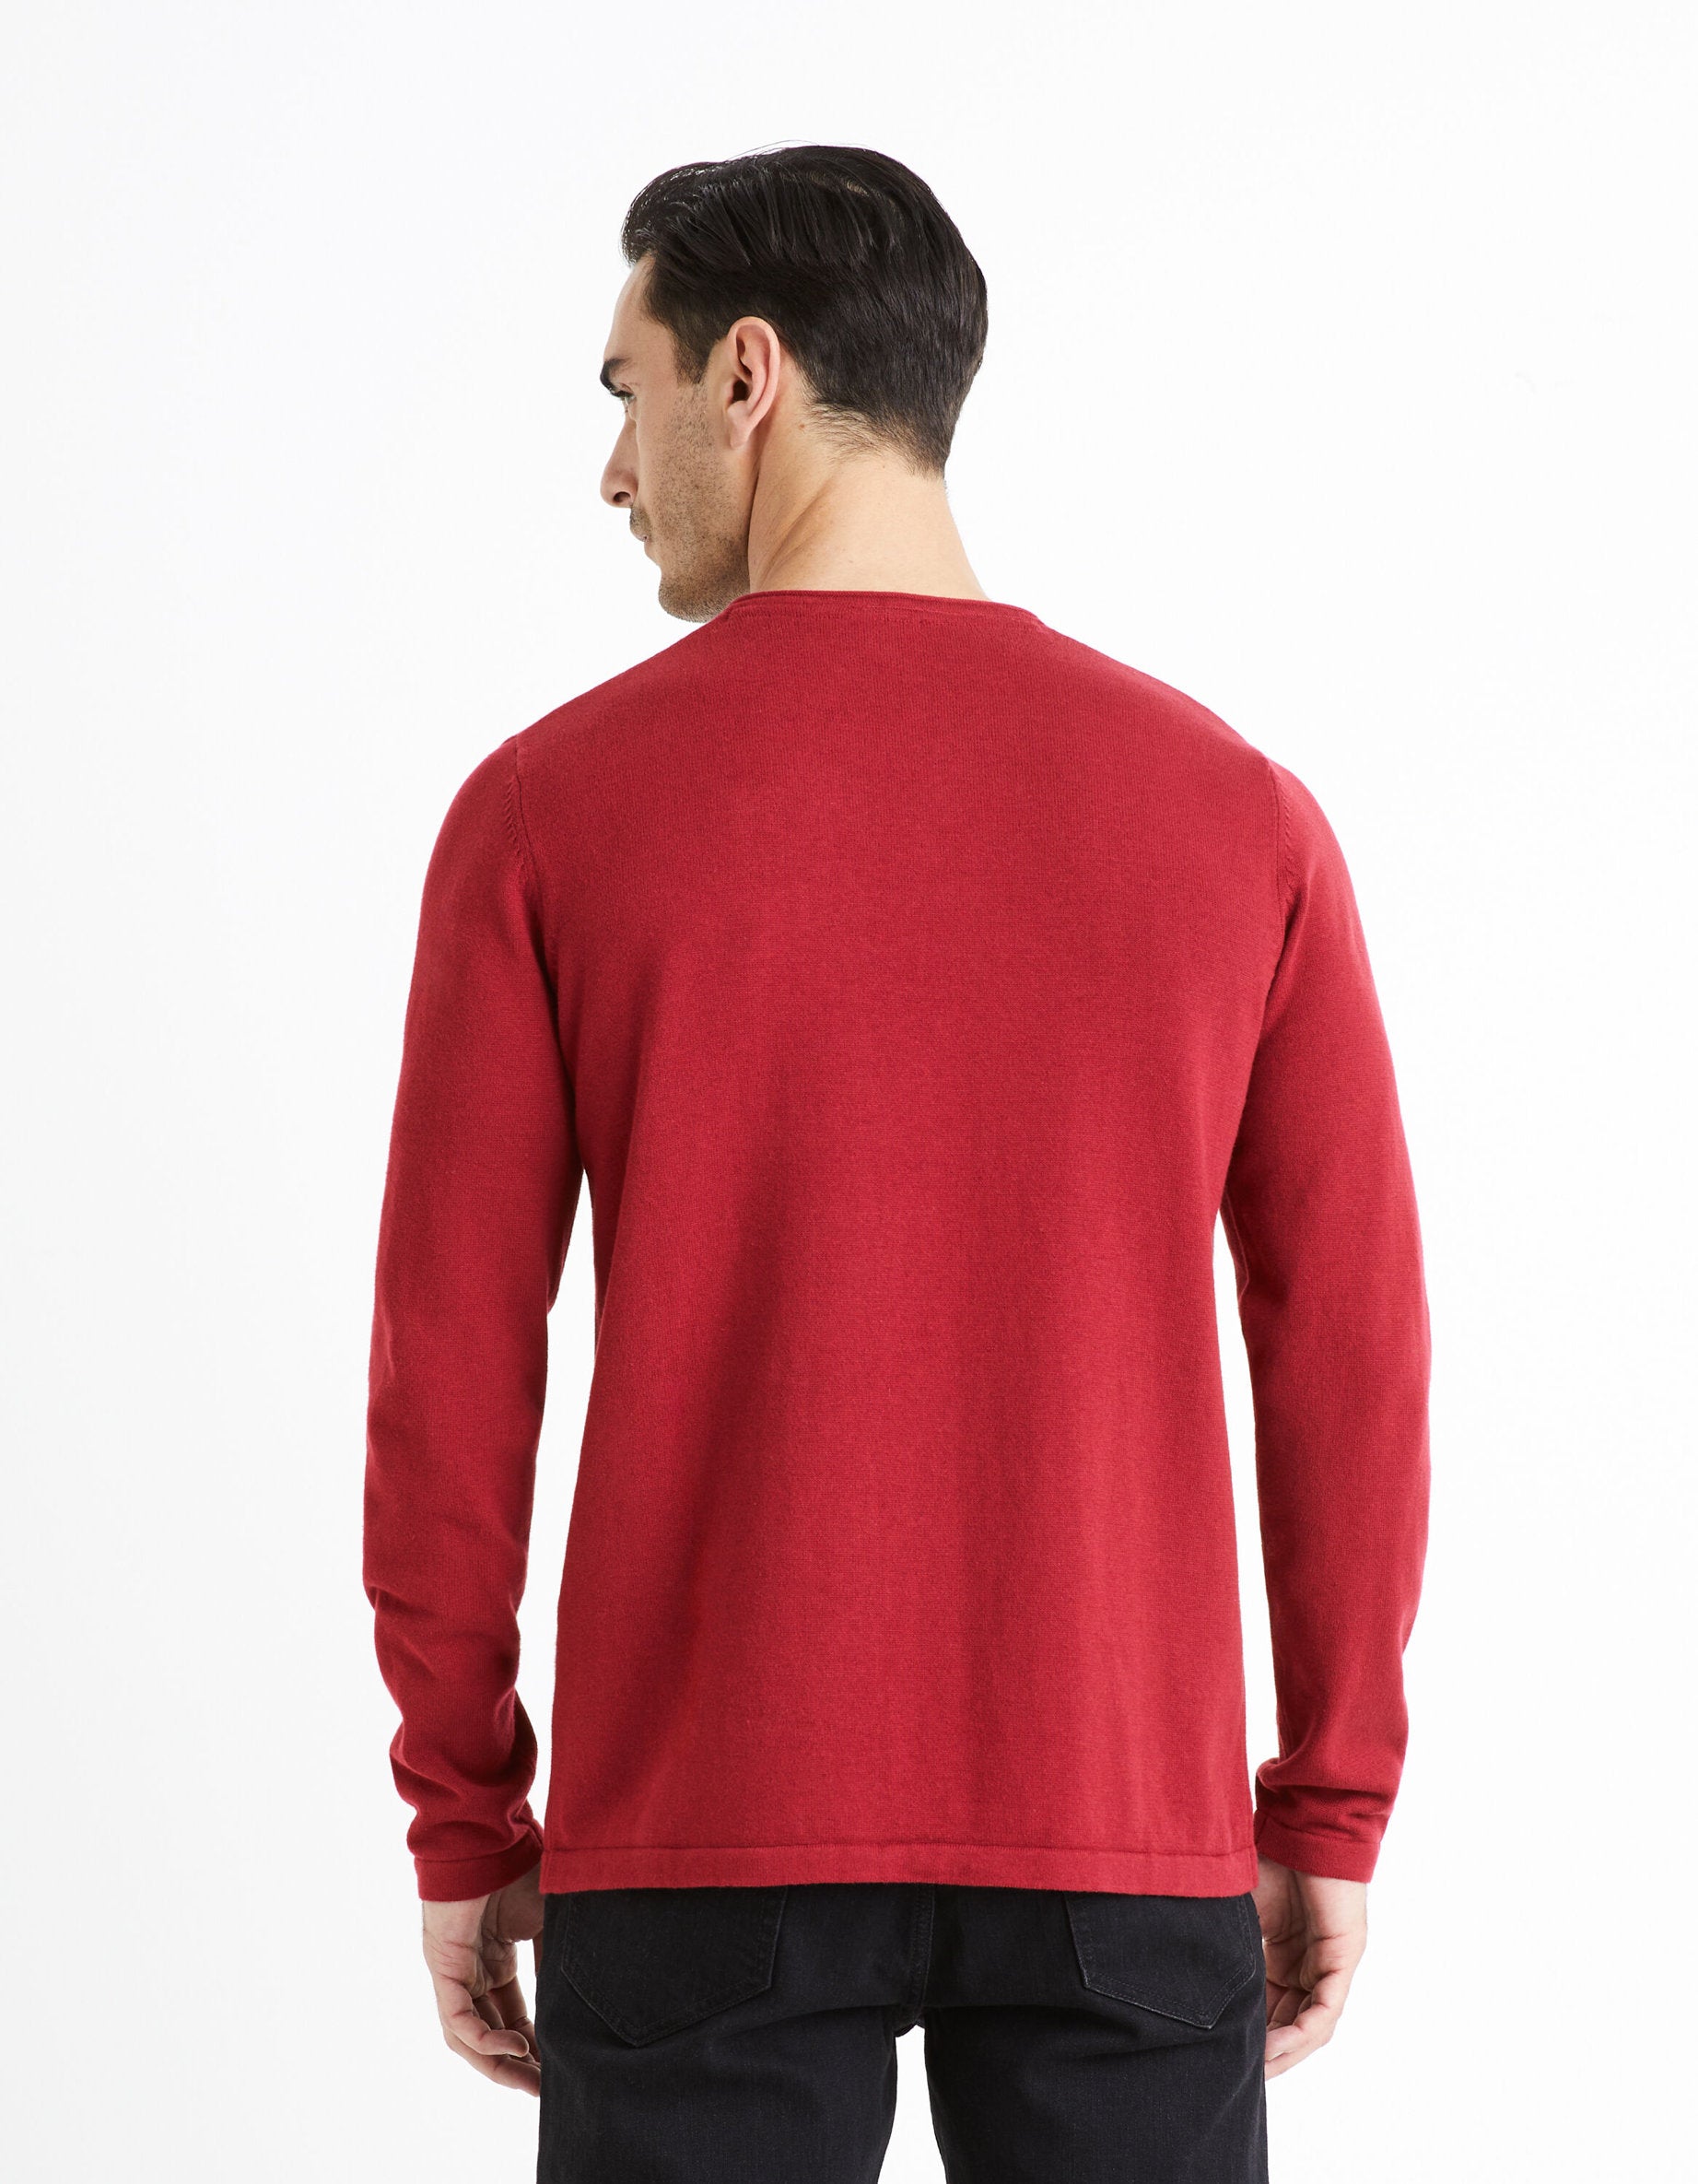 Tunisian Collar Sweater 100% Cotton - Burgundy_FELANO_BURGUNDY_04